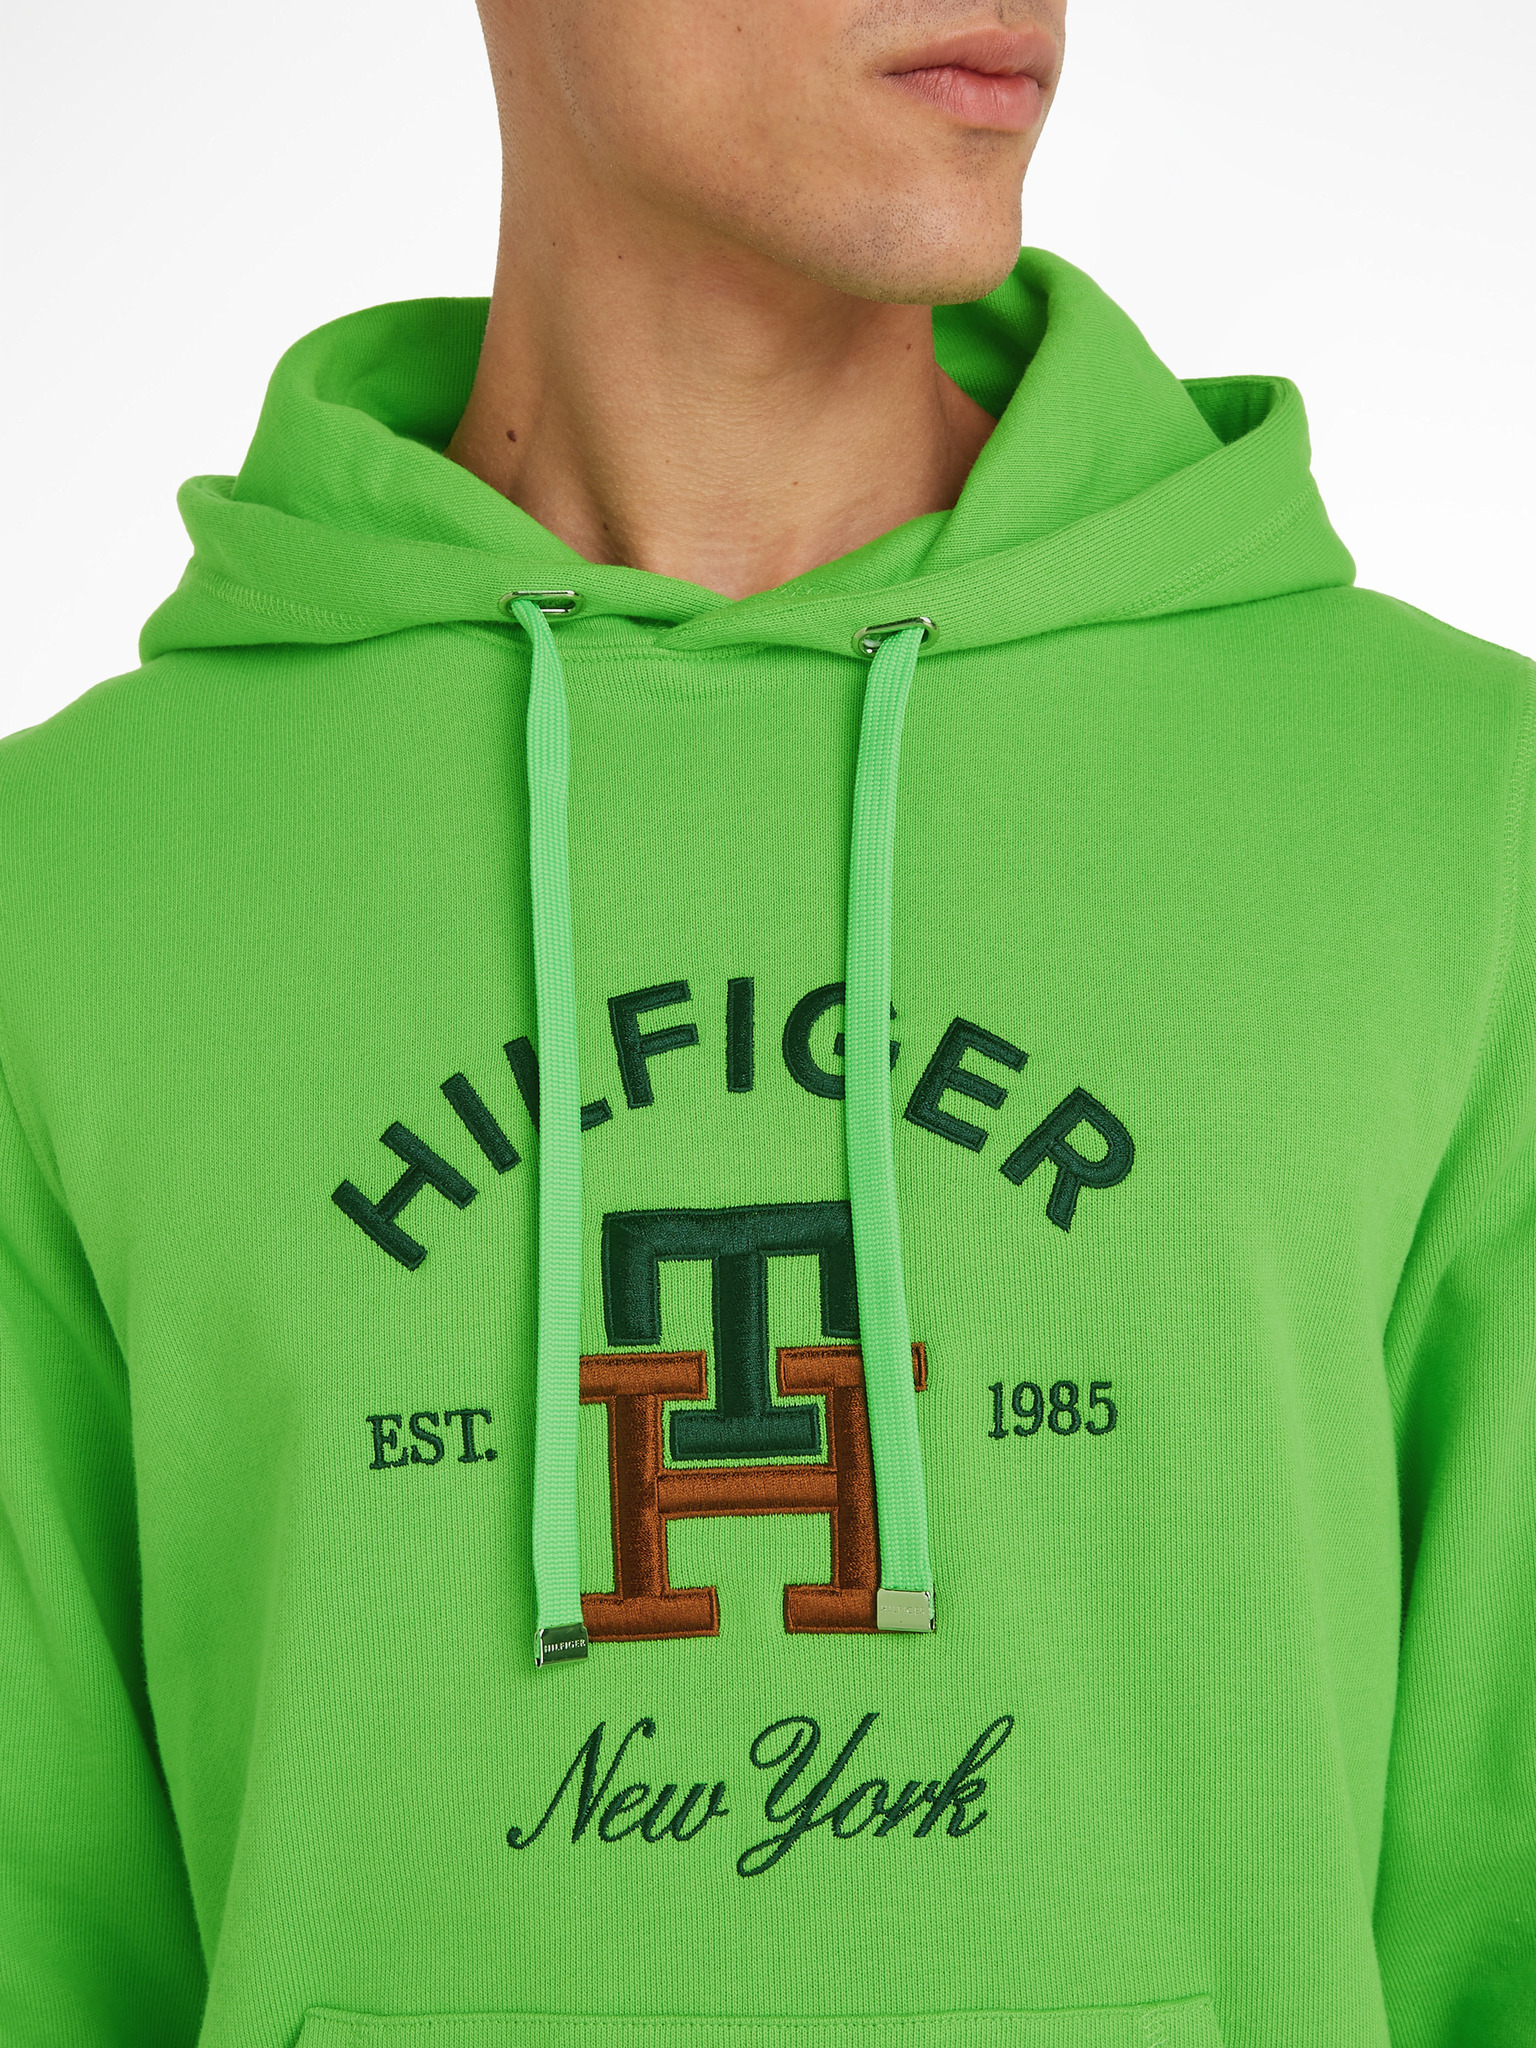 Tommy Hilfiger - Curved Monogram Hoody Sweatshirt